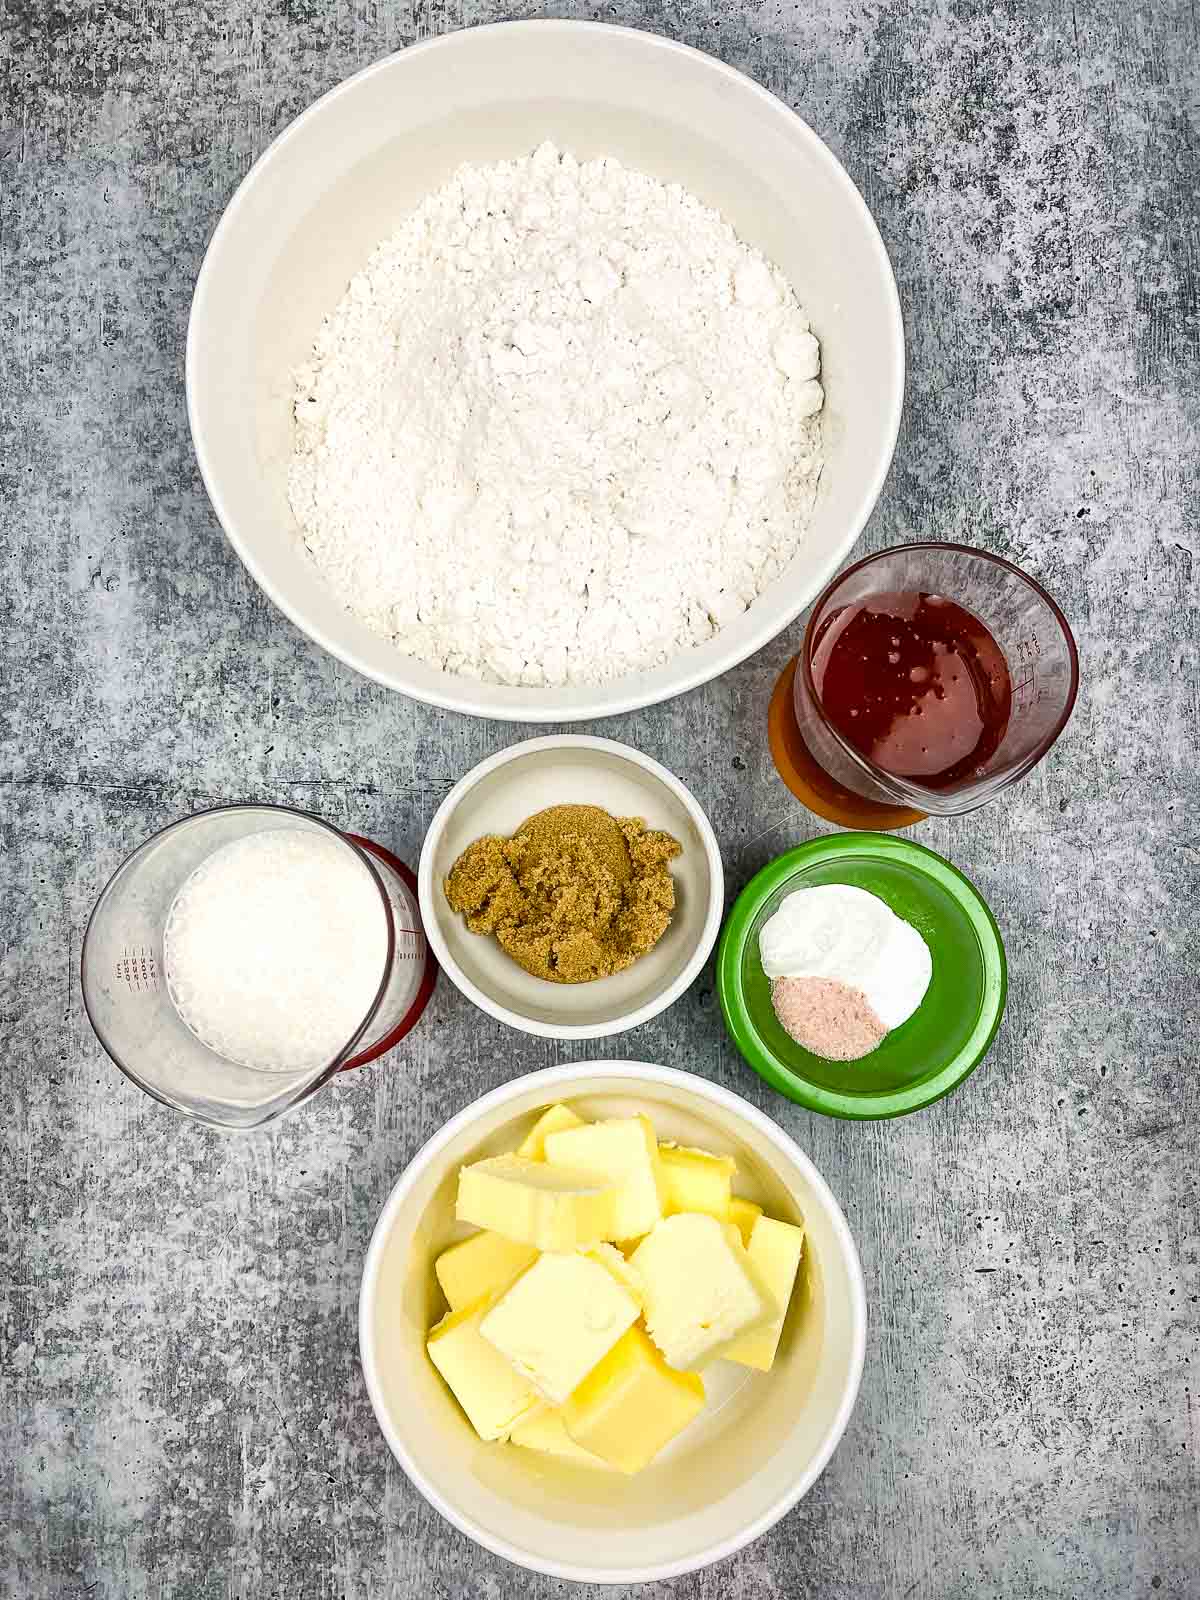 Ingredients for maple scones.